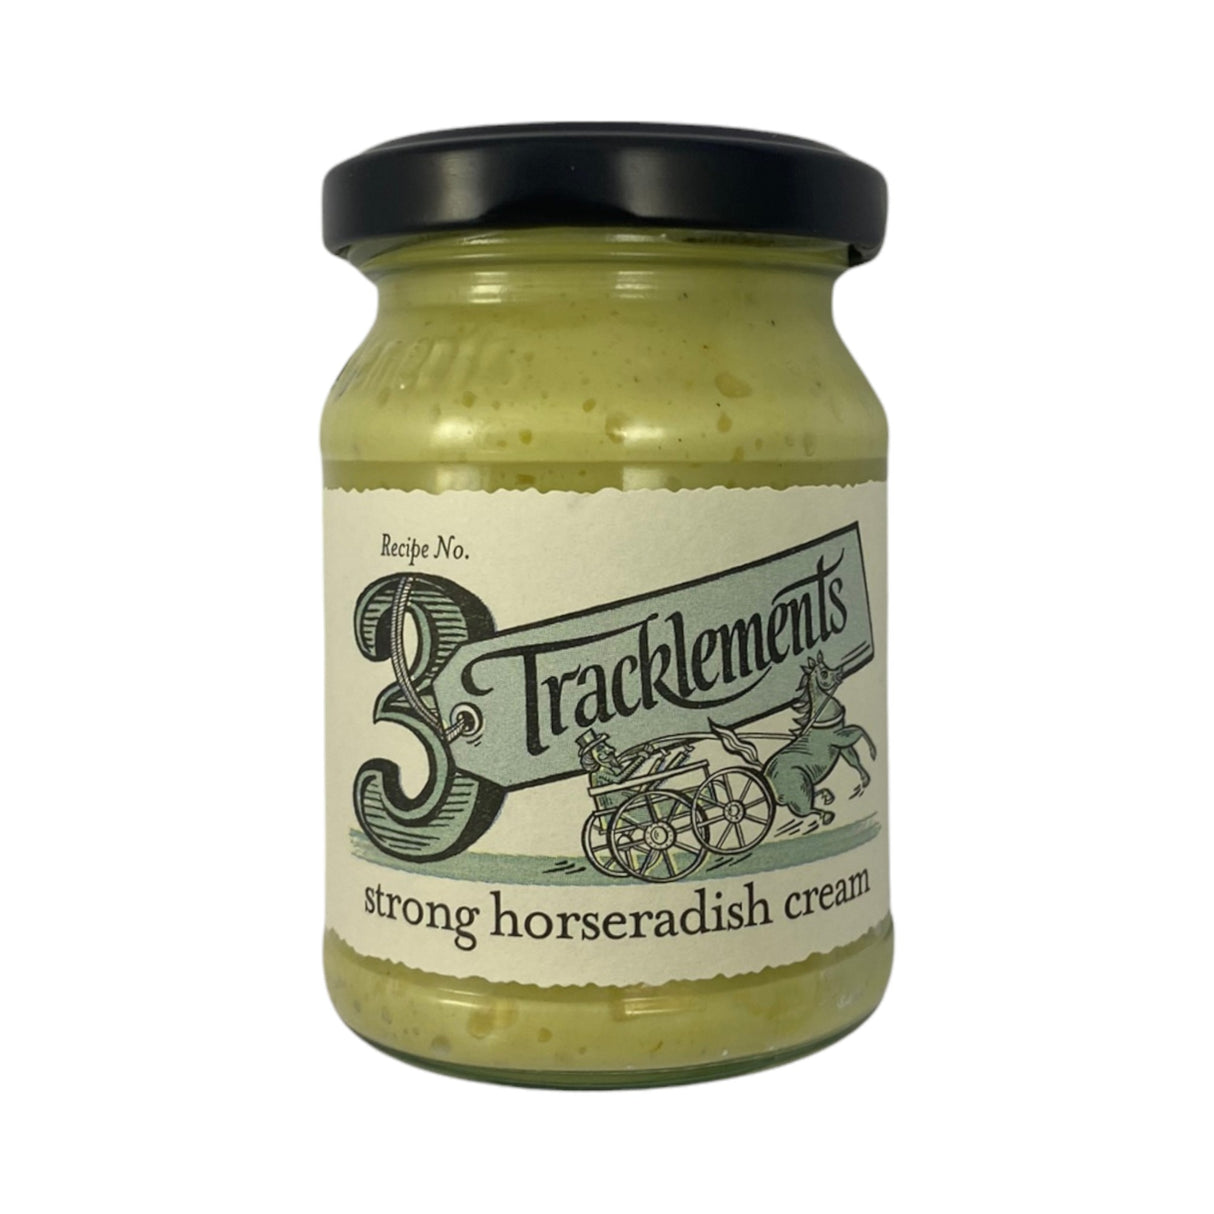 Tracklements - Horseradish Cream 140g